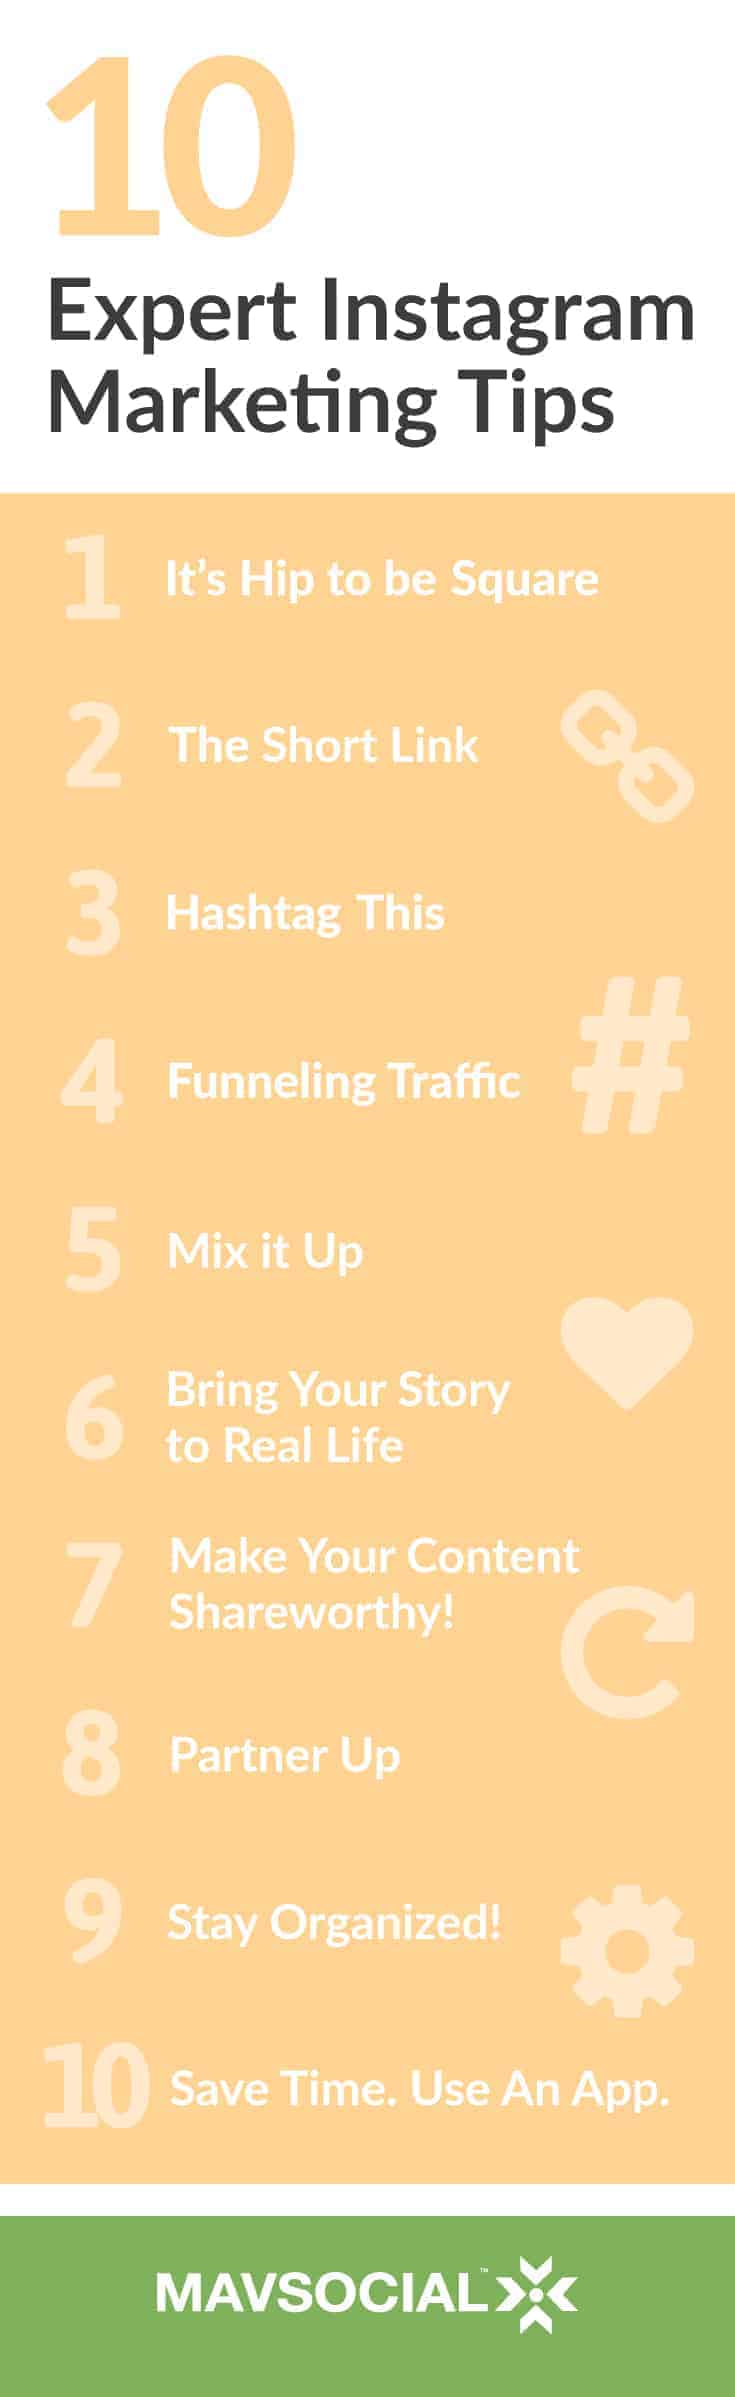 Expert Instagram Marketing Tips Infographic